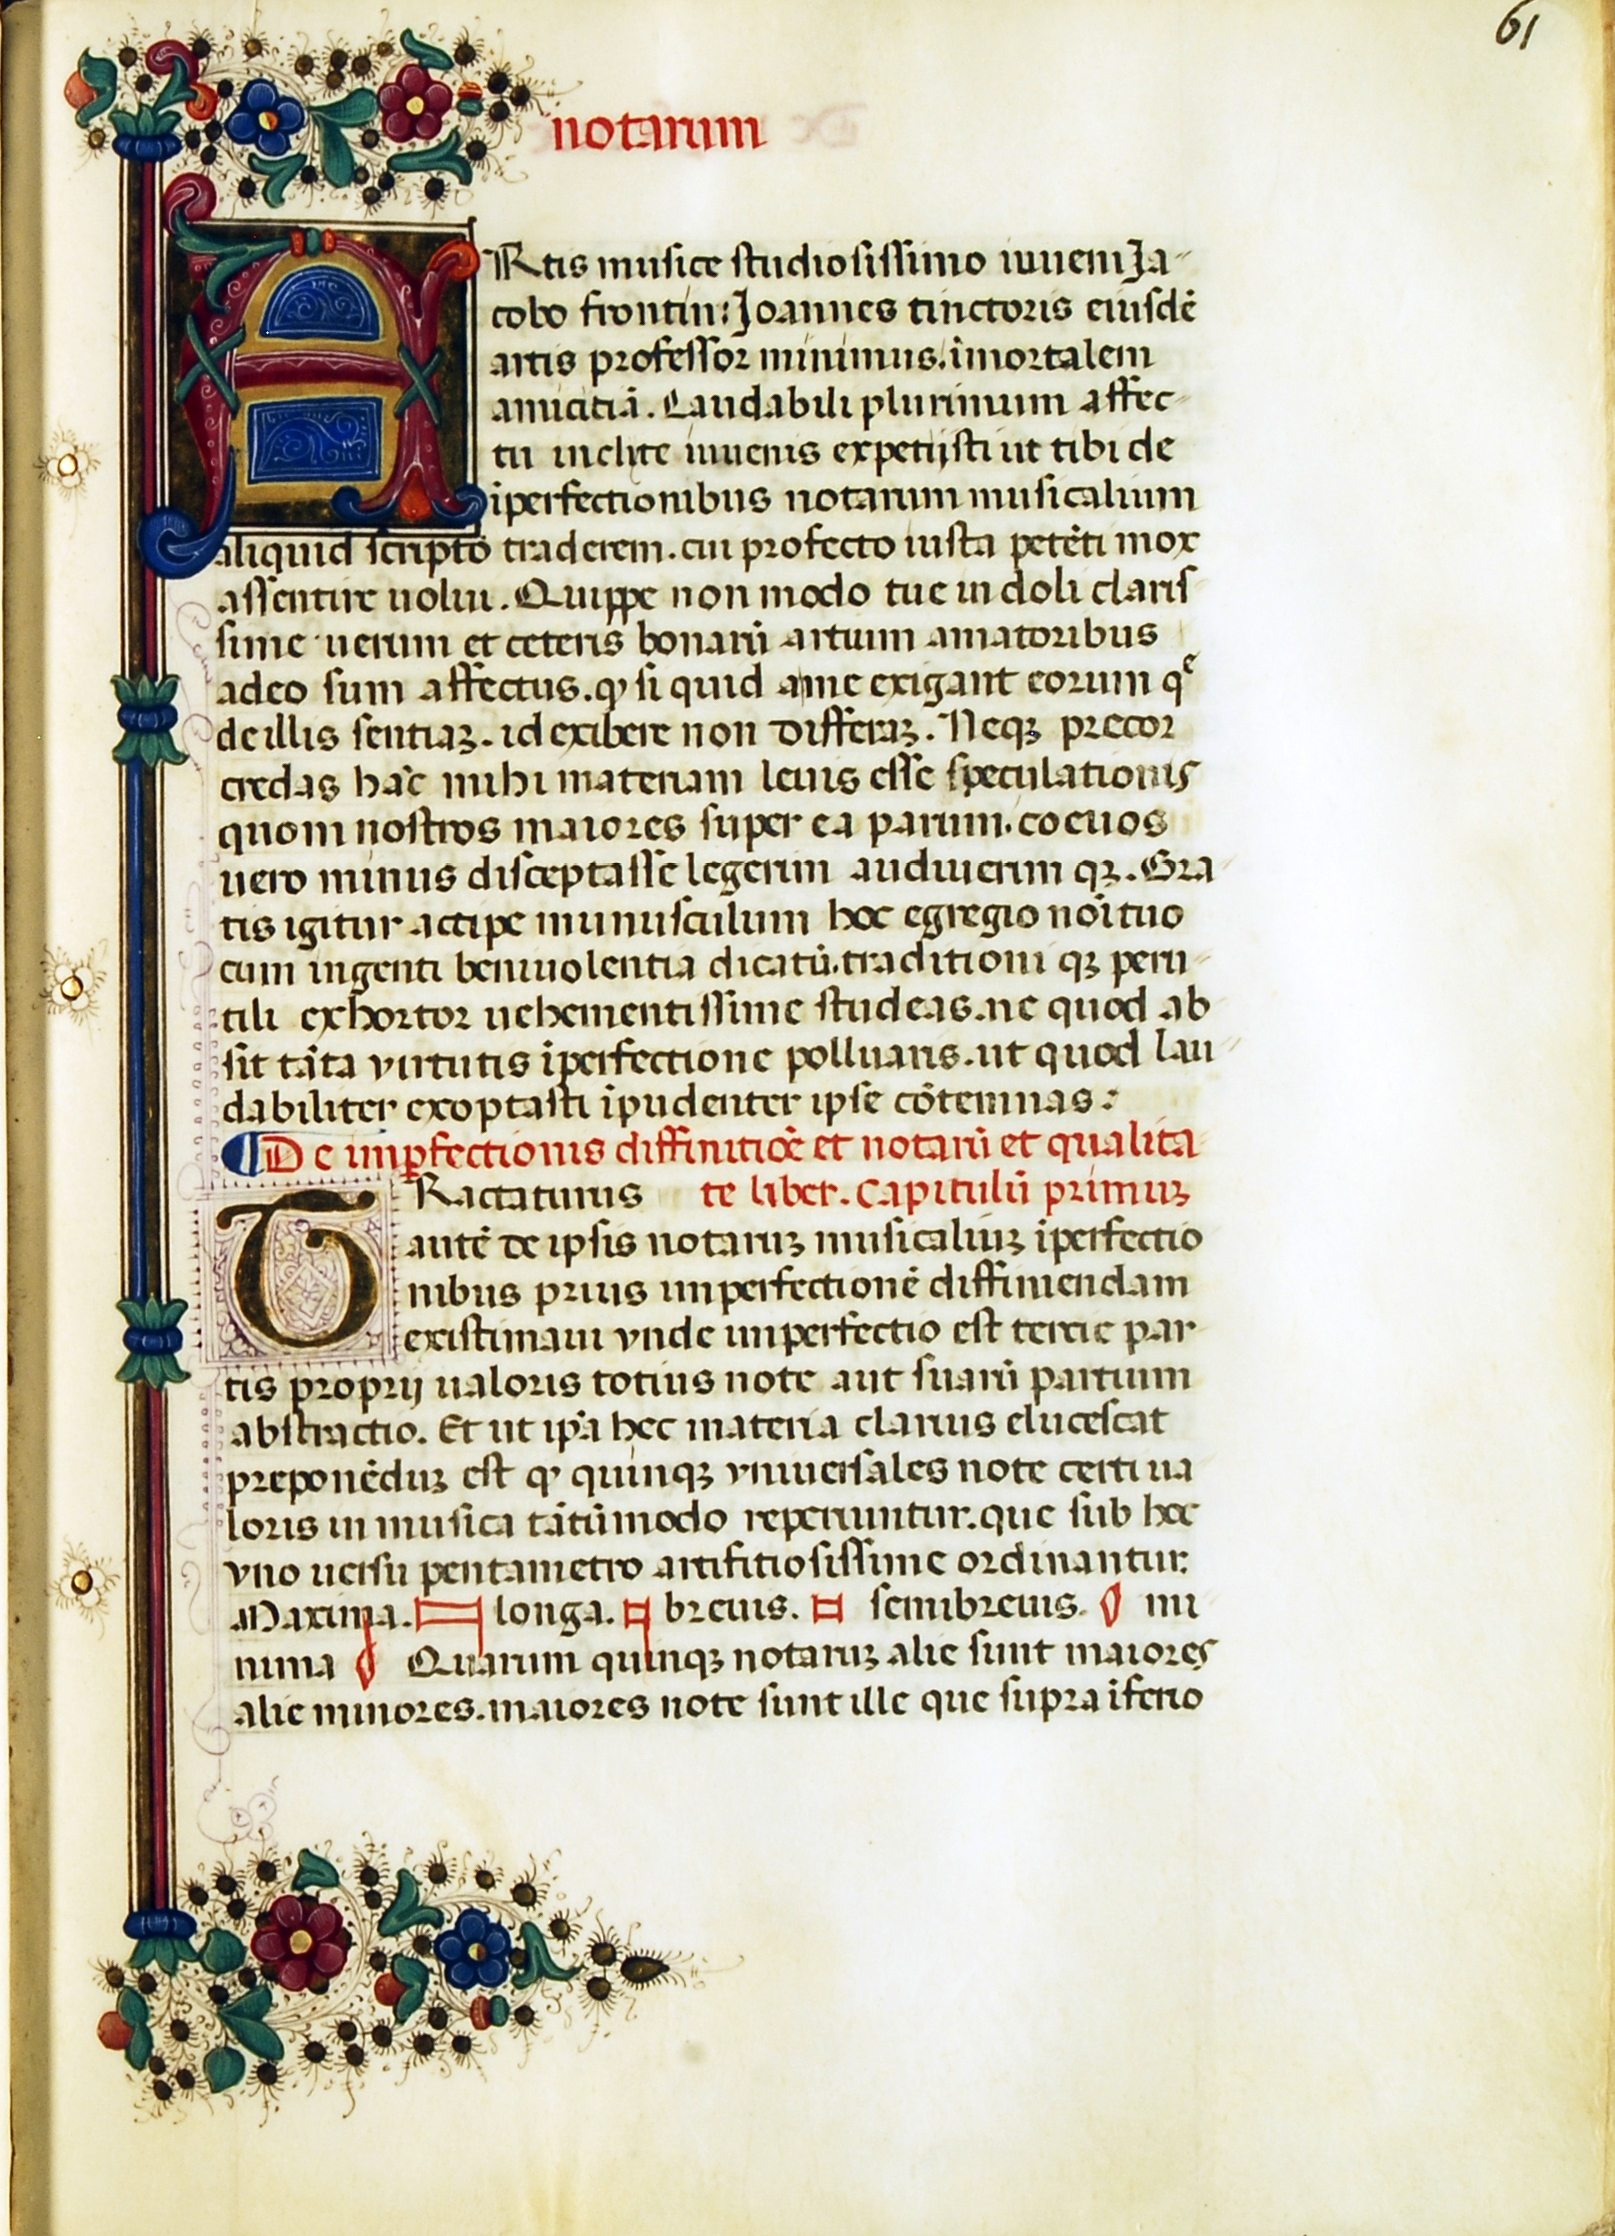 Bologna, Biblioteca Universitaria, MS 2573, fol. 61r. Source: Biblioteca Universitaria, Bologna.